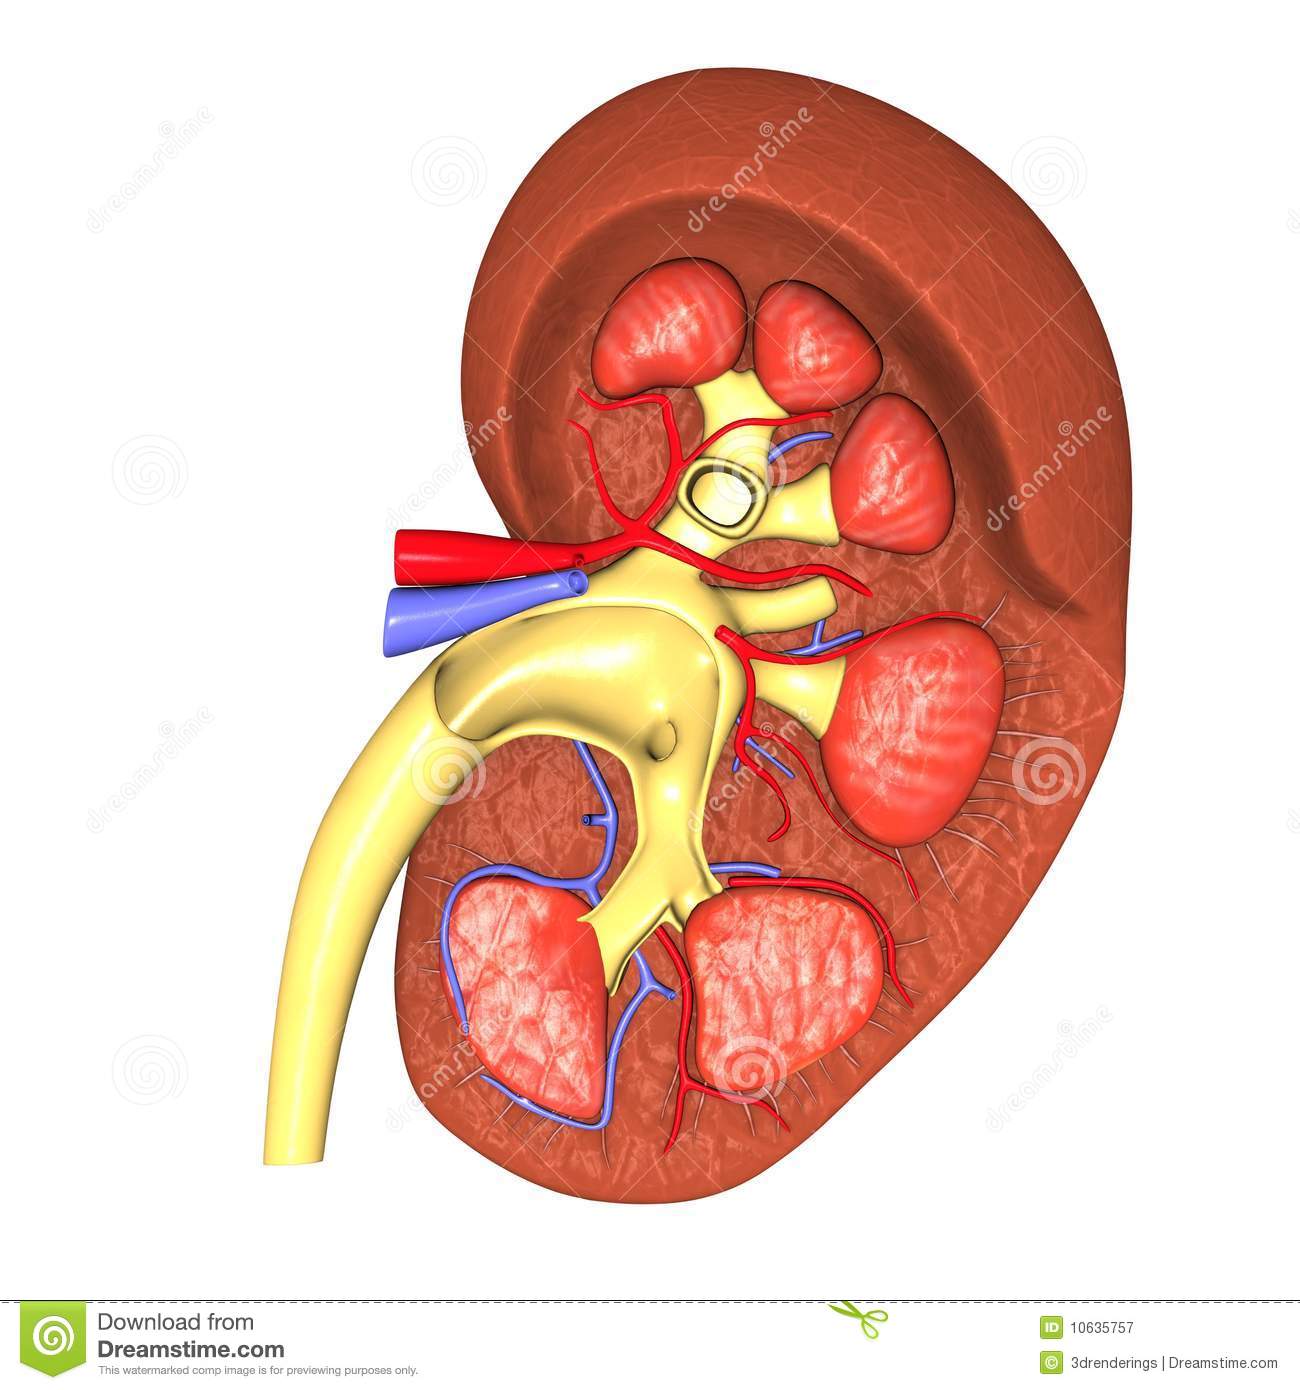 Kidney Clipart Kidney